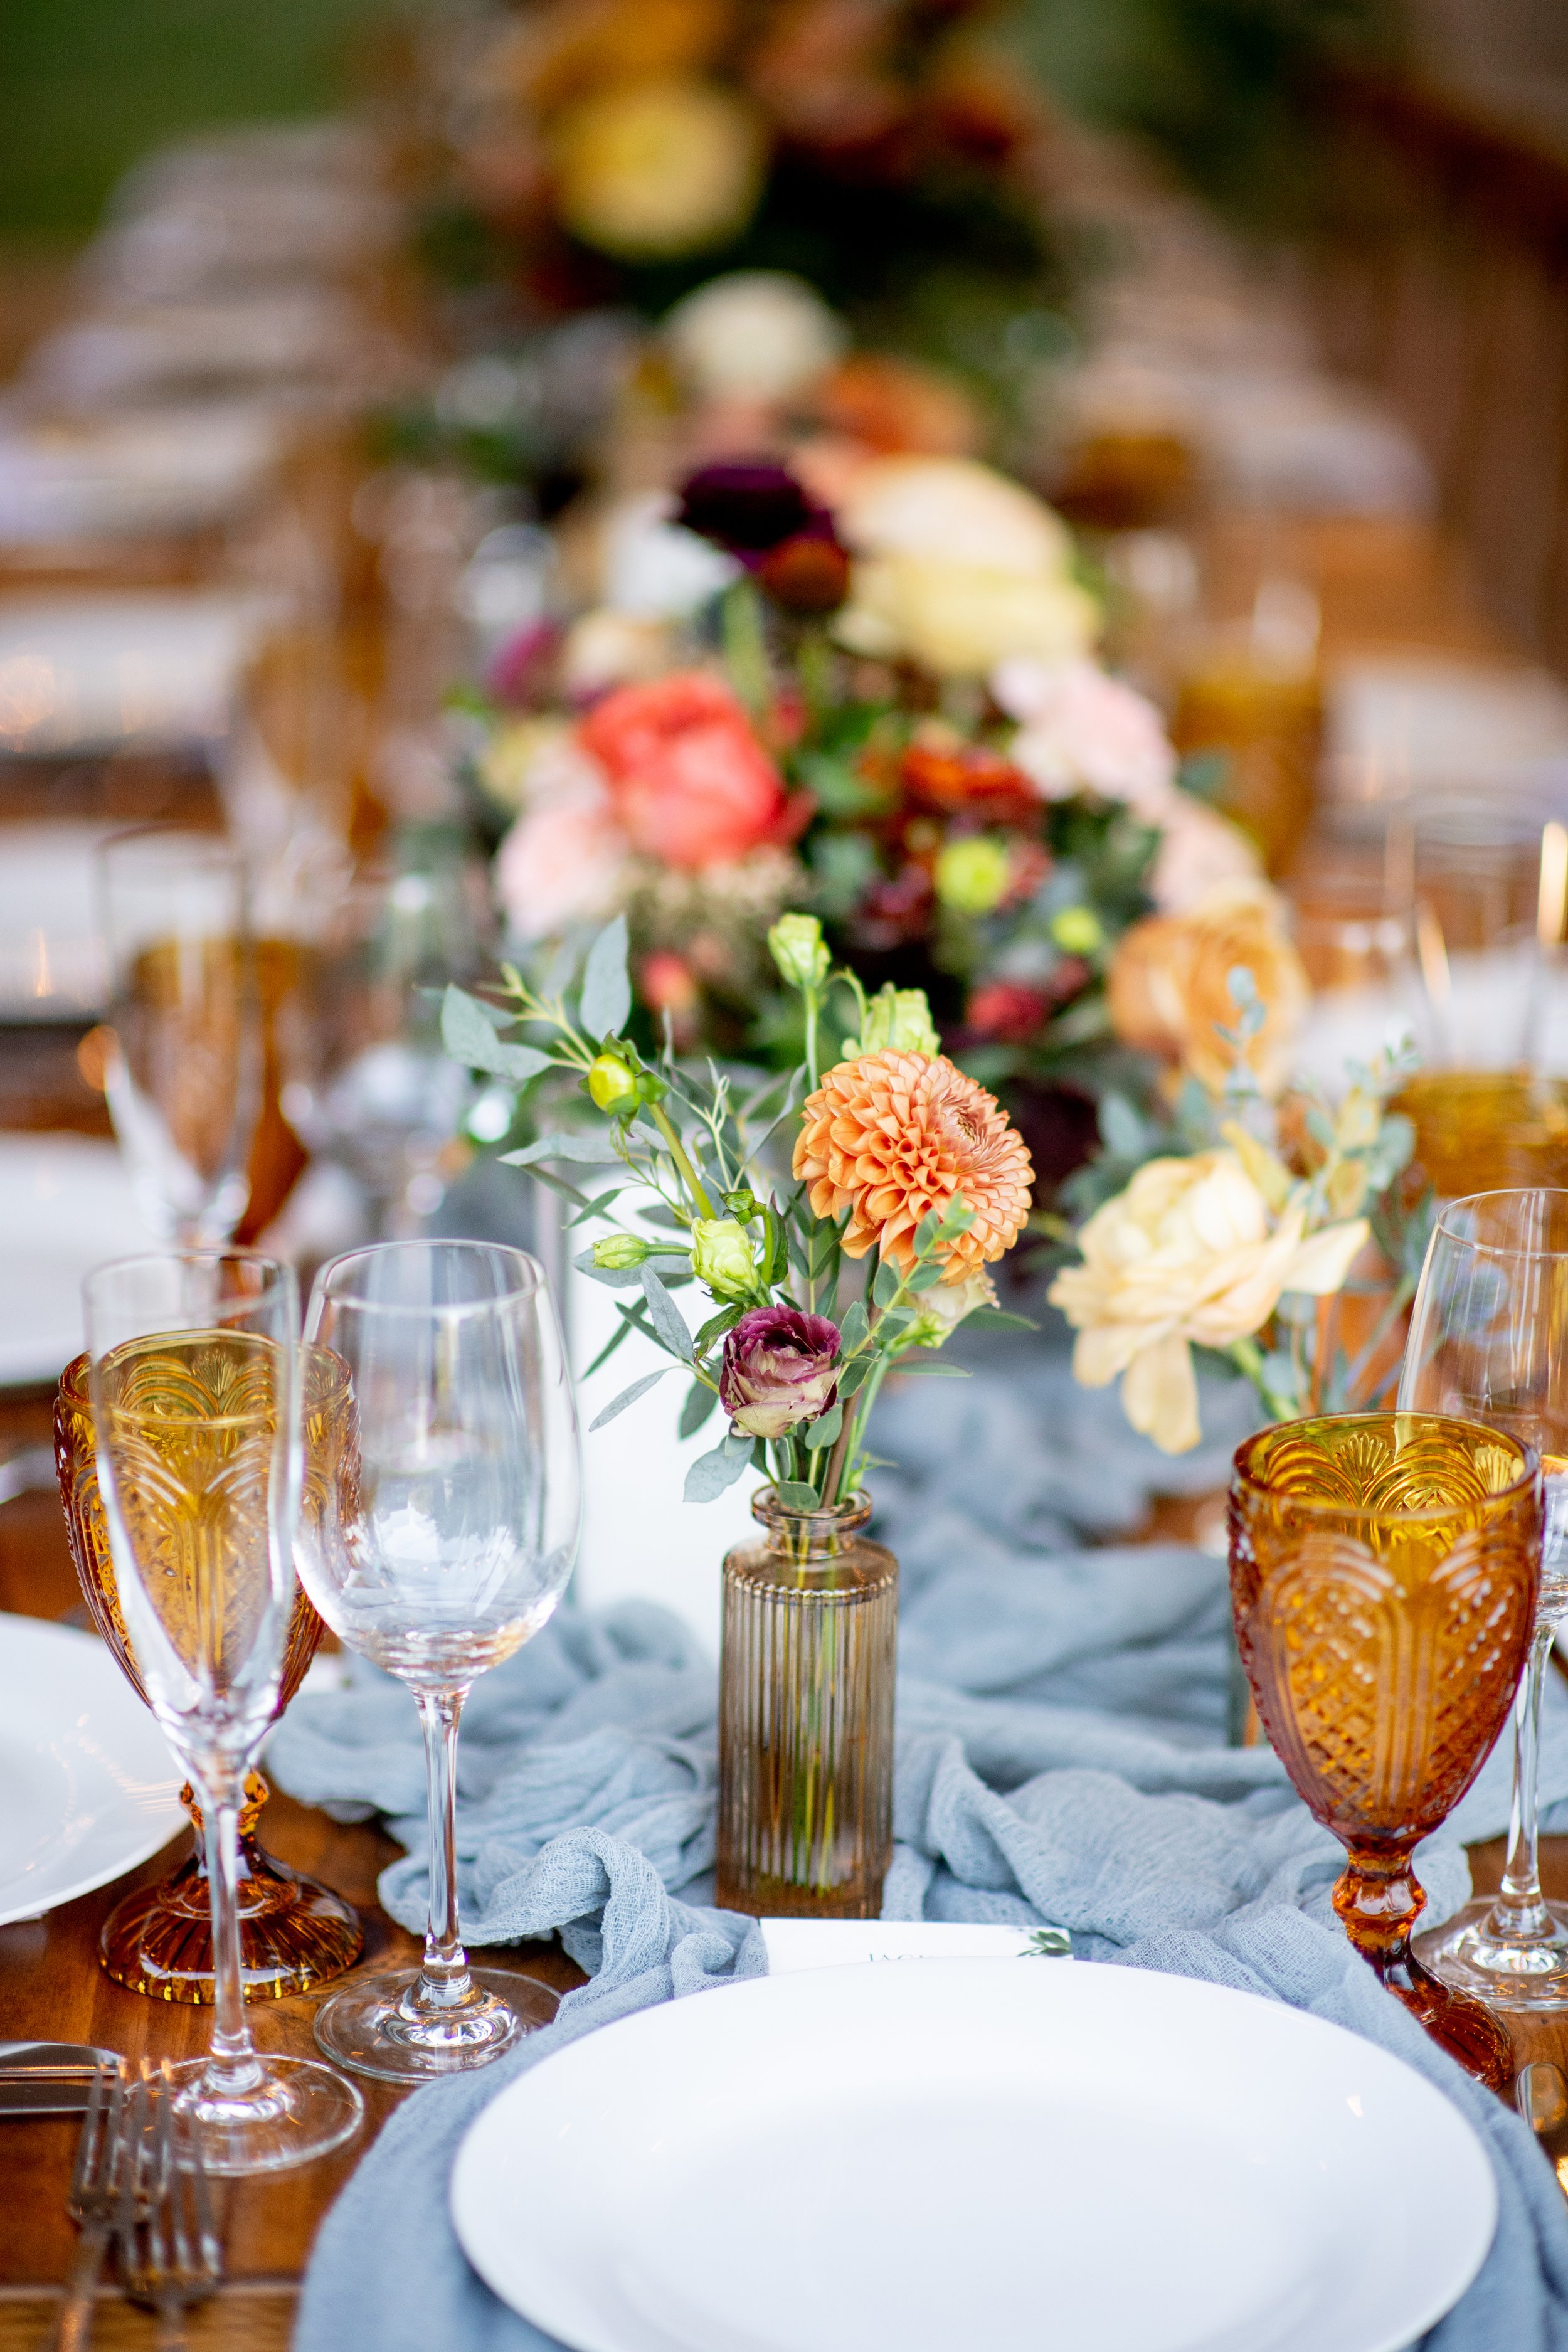  Backyard Wedding, Intimate Wedding, Family Style, Farm Table, Blue Runner, Amber Goblets, Dahlia Bud Vases 